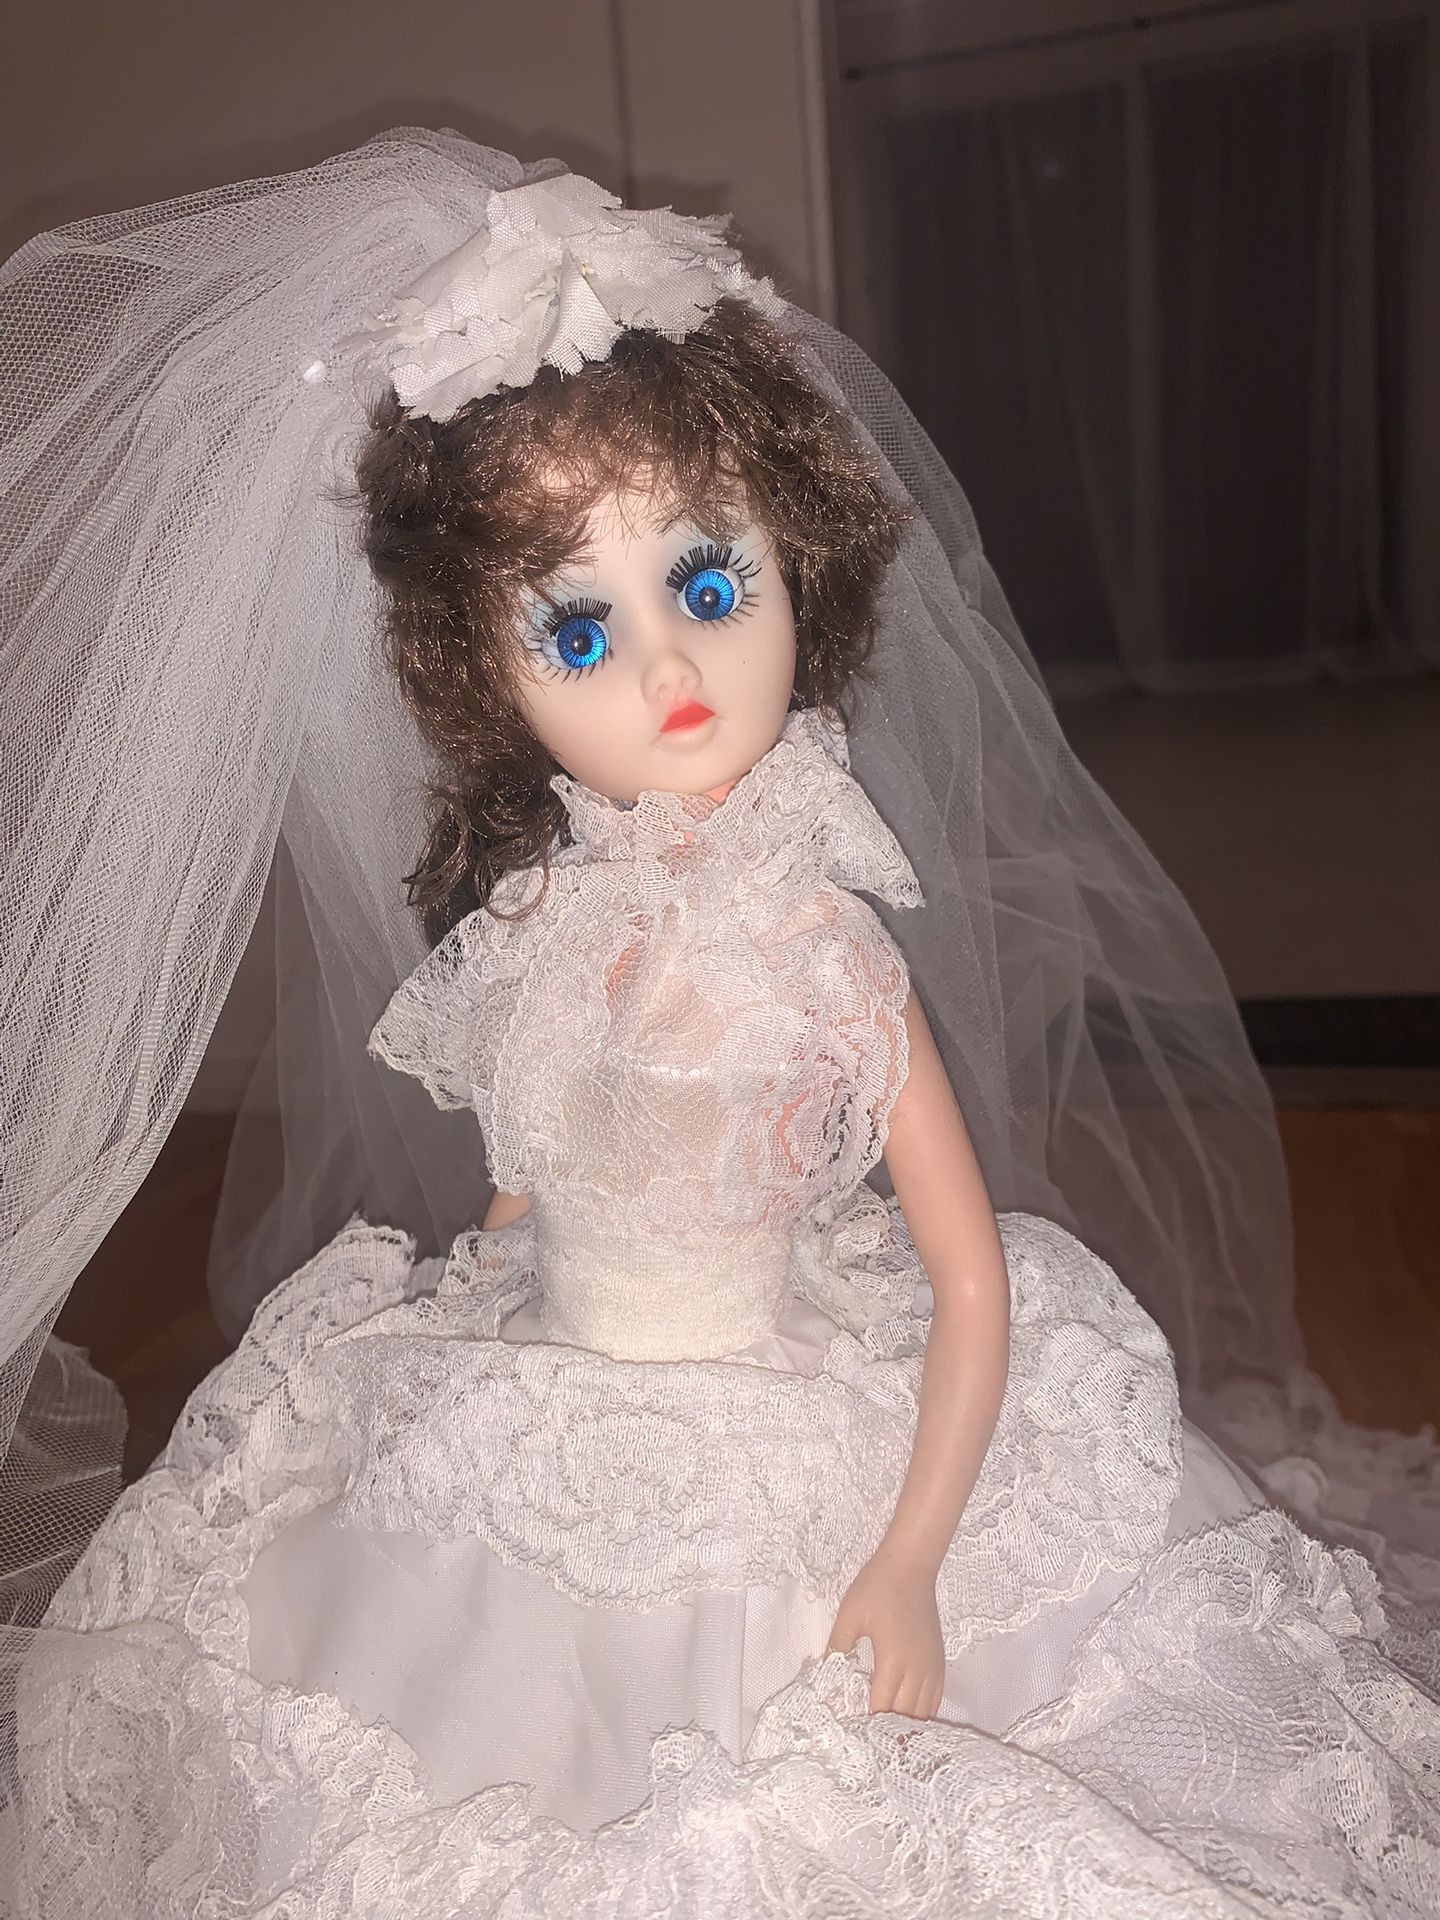 Doll with a wedding dress 